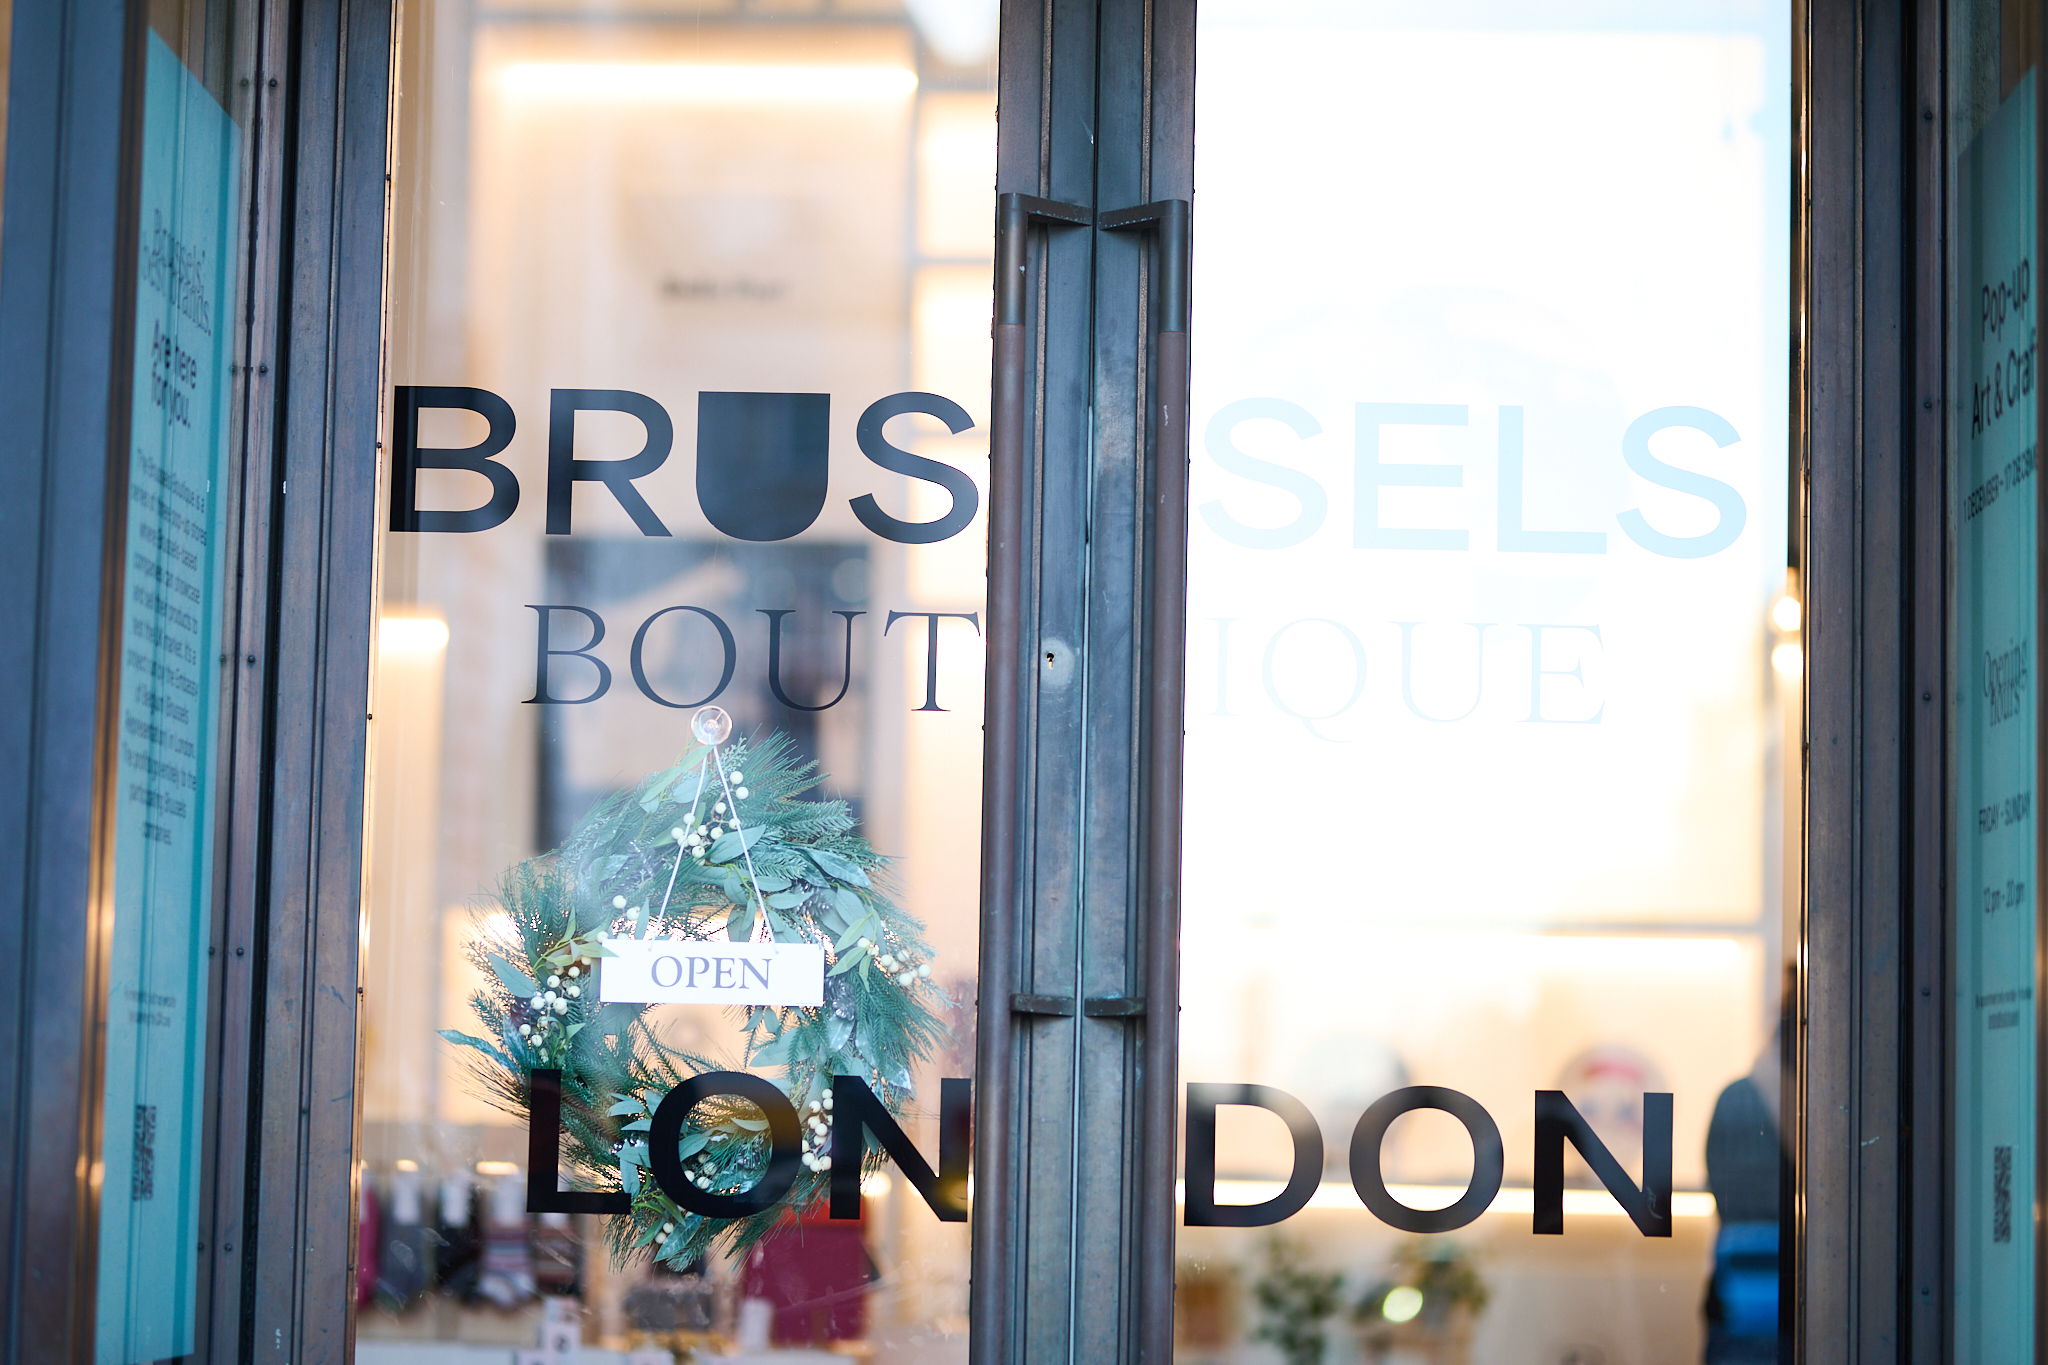 Brussels Boutique in Londen ©hub.brussels